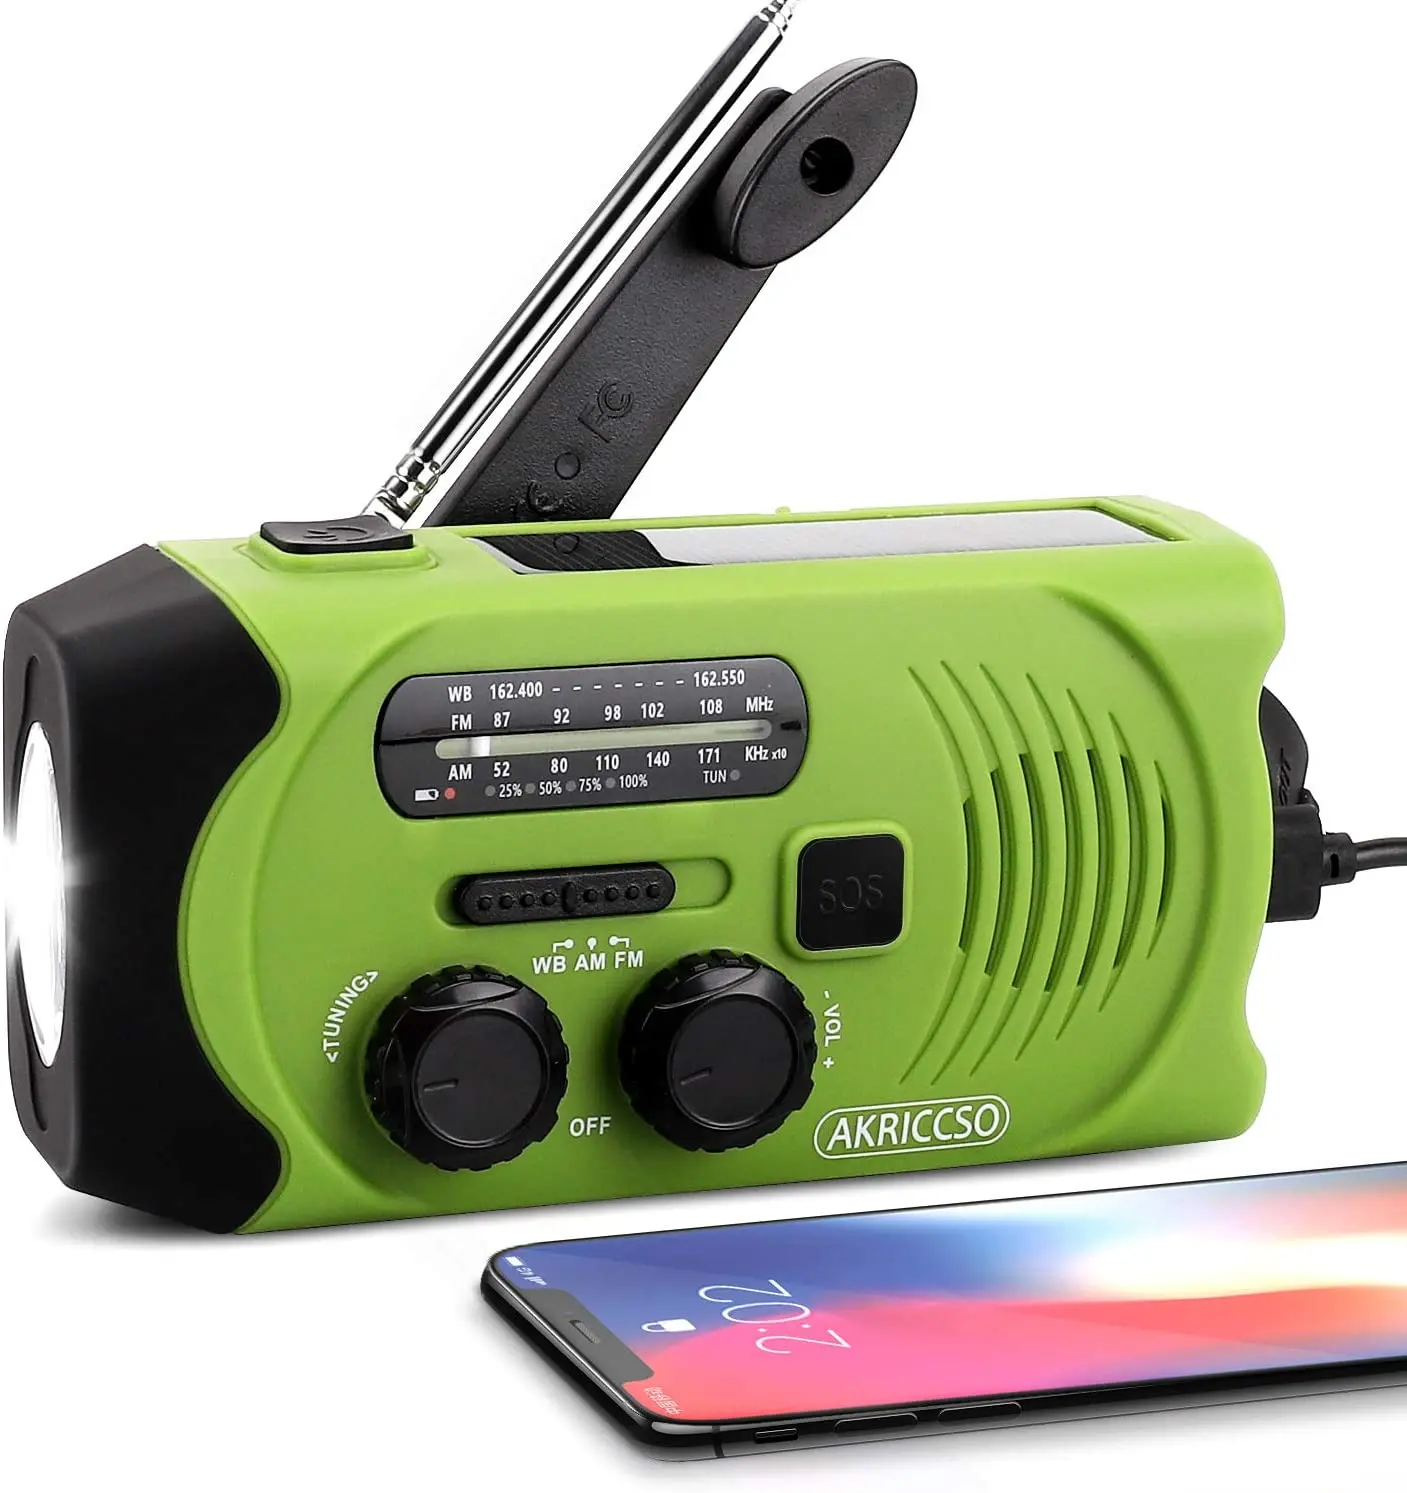 

Solar hand Crank flashlight AM/FM/NOAA Portable Outdoor Waterproof Radio with Mobile Charger power bank, Customerzied